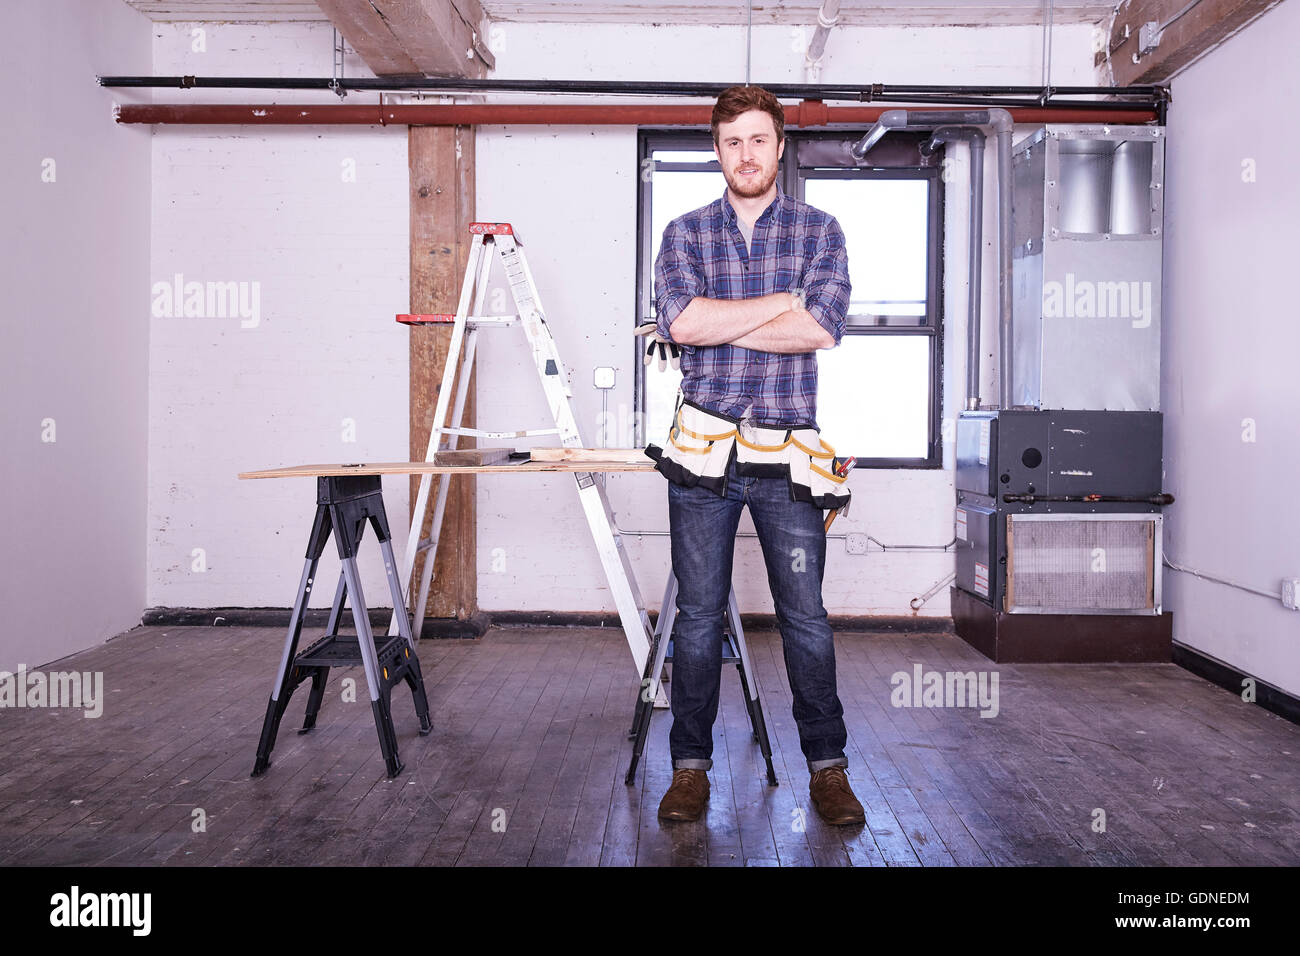 Jeune homme en atelier wearing tool belt, bras croisés looking at camera Banque D'Images